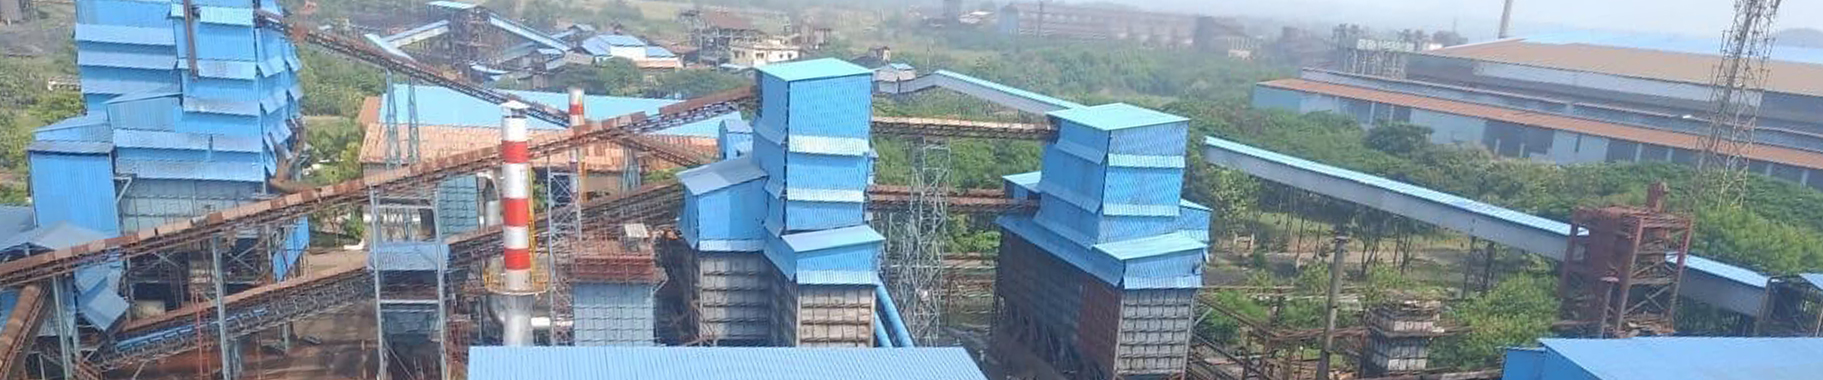 LIBERTY Steel restarts Adhunik Steel in India